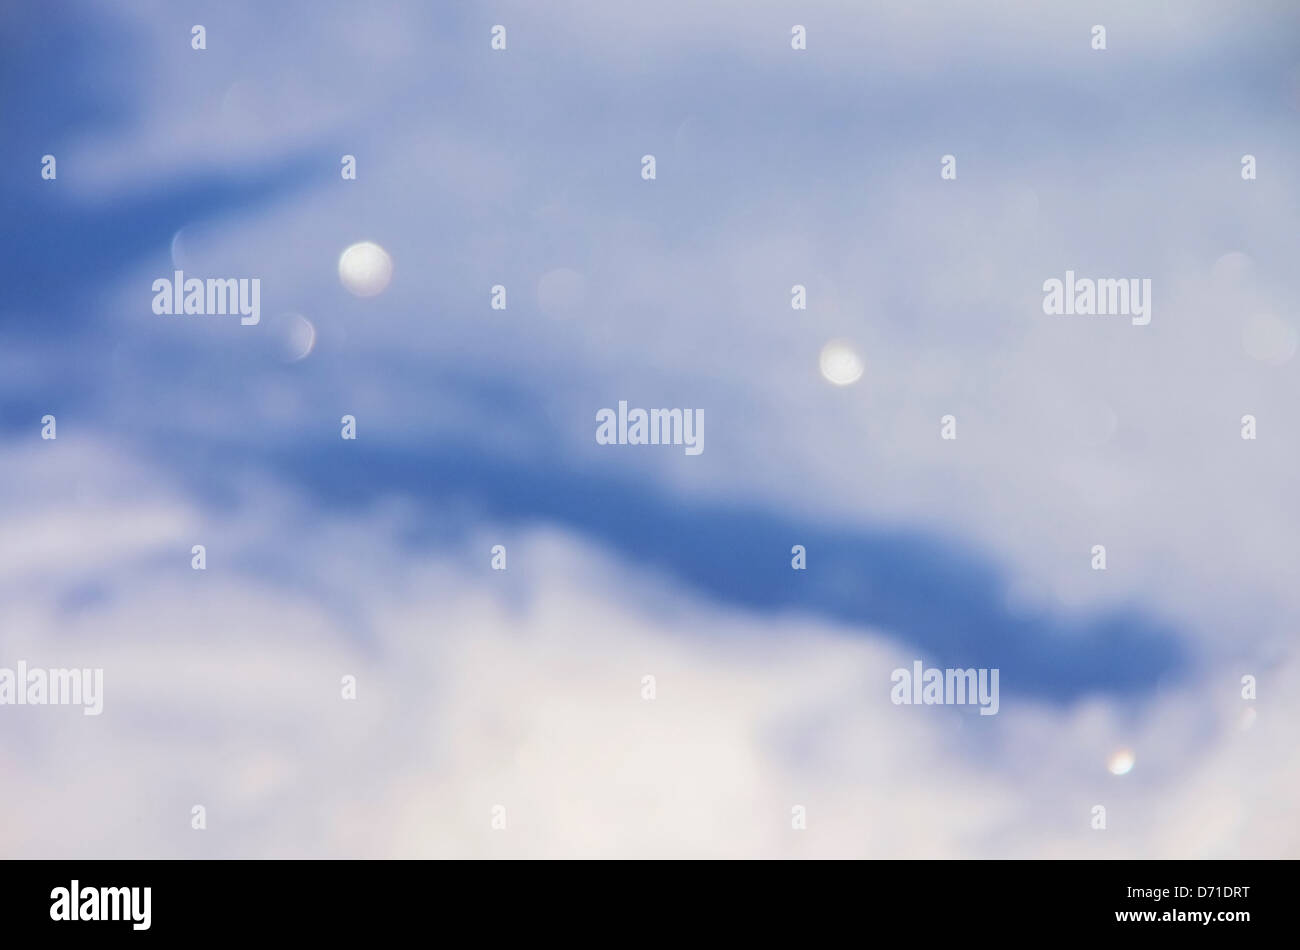 Schnee Mit Bokeh - Schnee mit Bokeh 01 Stockfoto